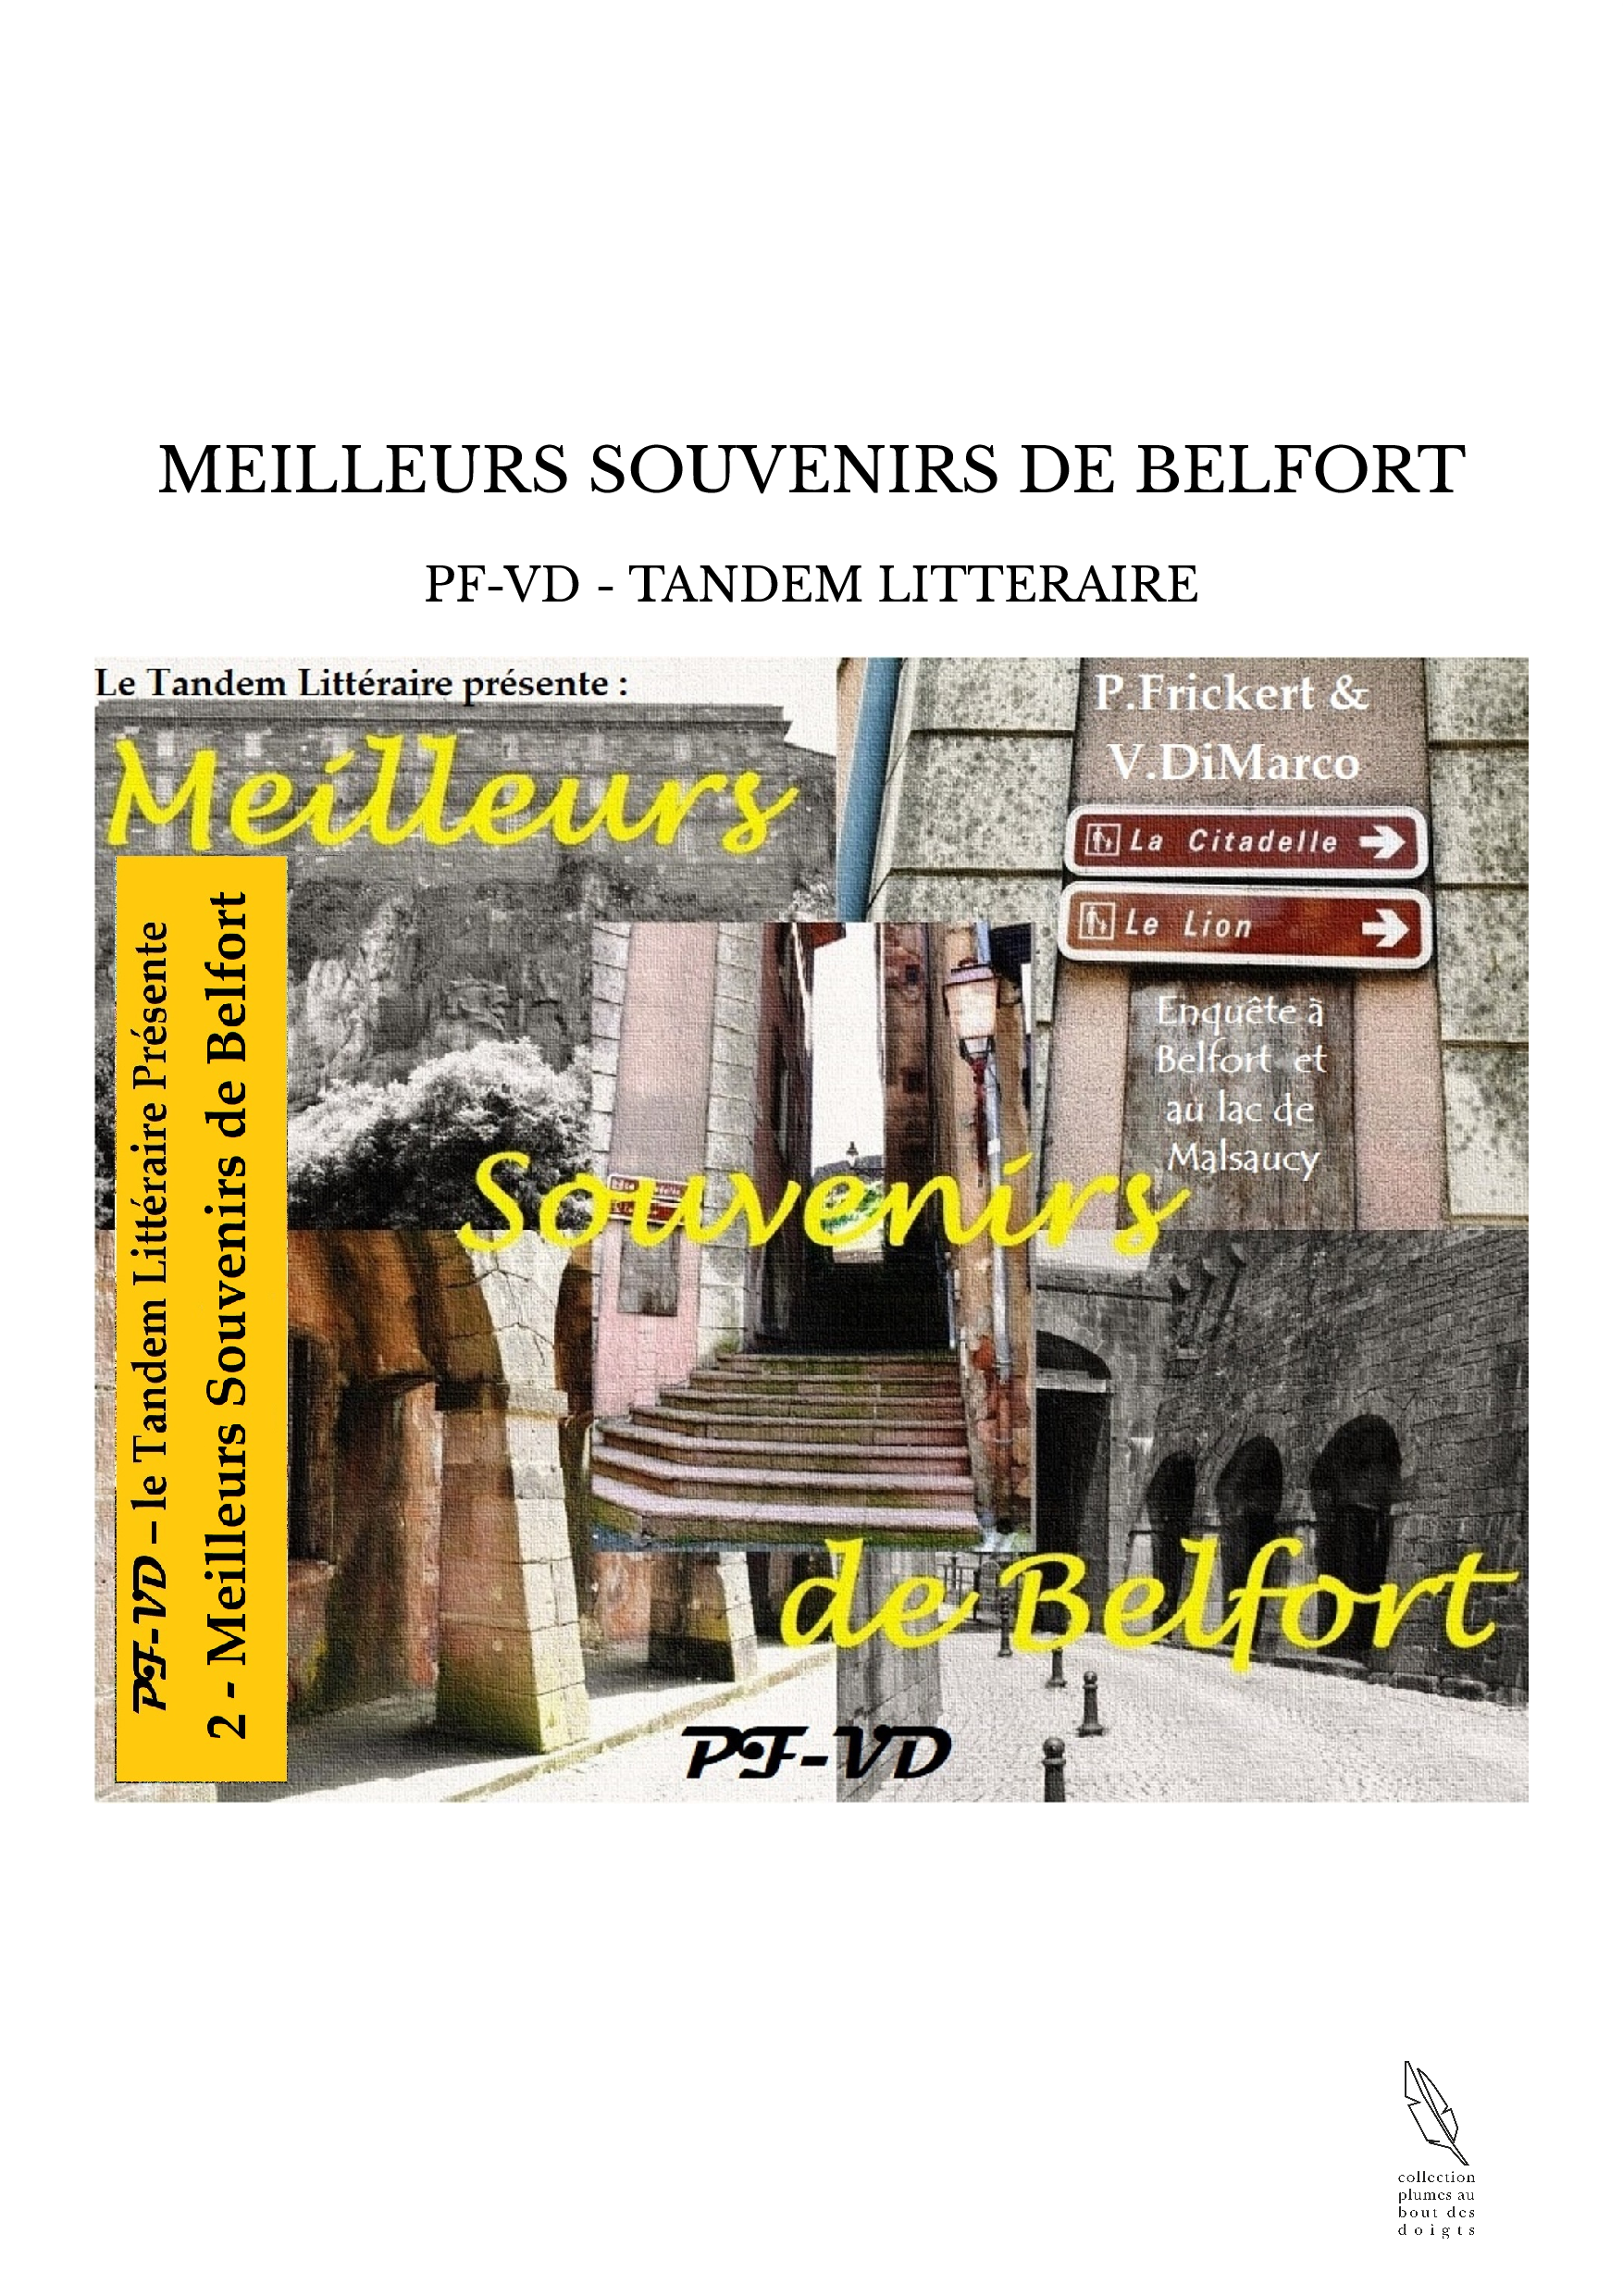 MEILLEURS SOUVENIRS DE BELFORT